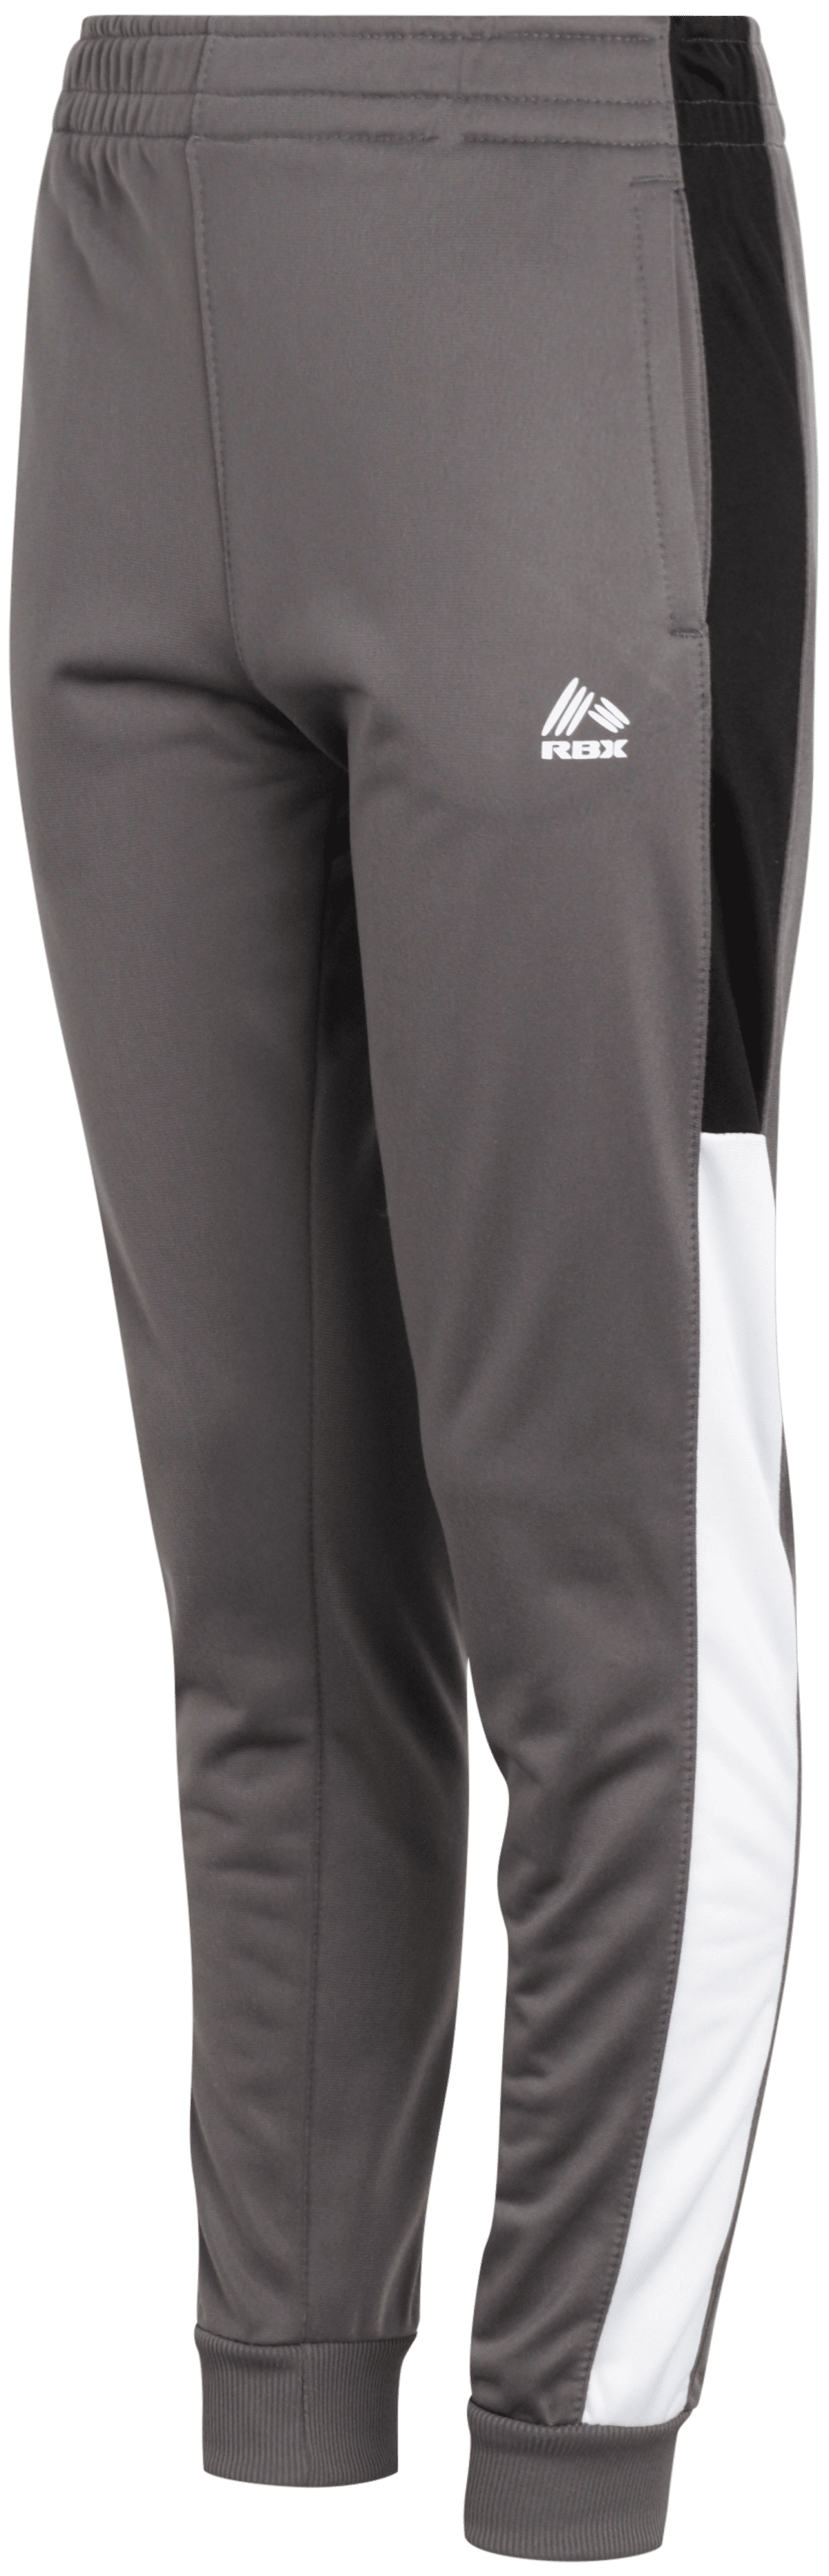 Active Tricot Joggers Warm-Up Track Pants RBX Boys Sweatpants 4 Pack 